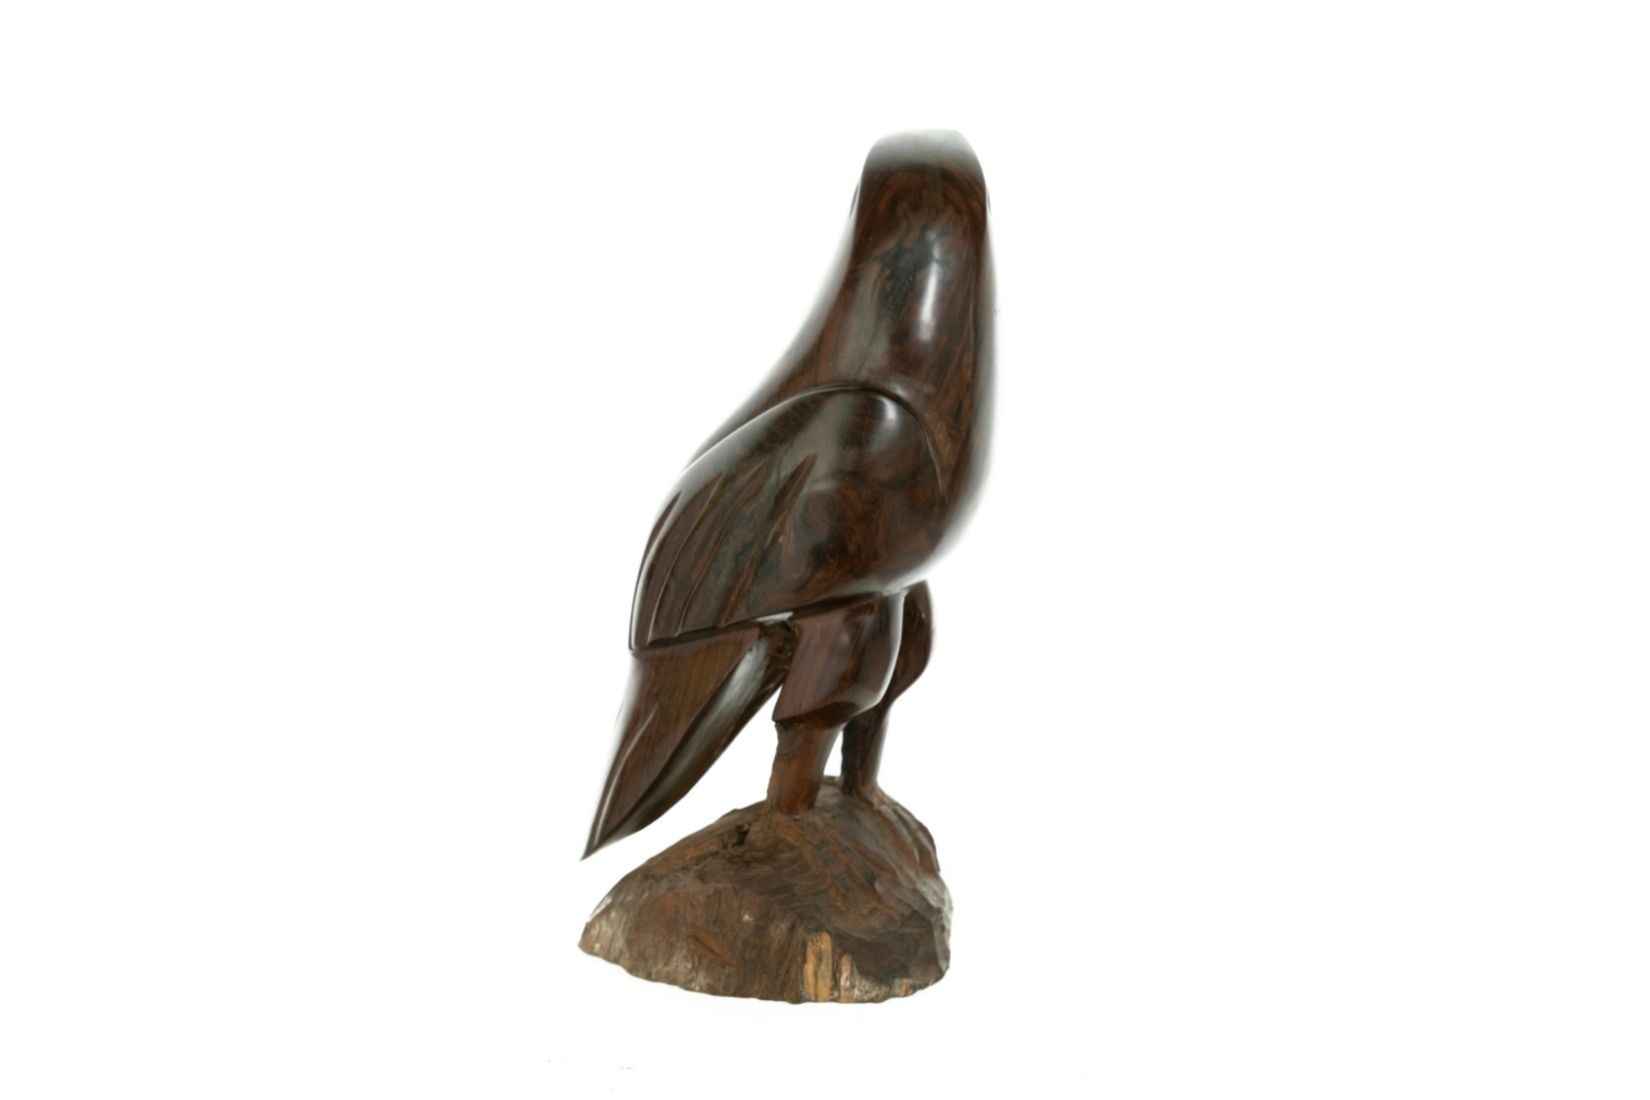 Águila de madera de palo fierro tallada. Artesano desconocido. Punta Chueca, Son. Col. Populart.  (Foto: EKV).